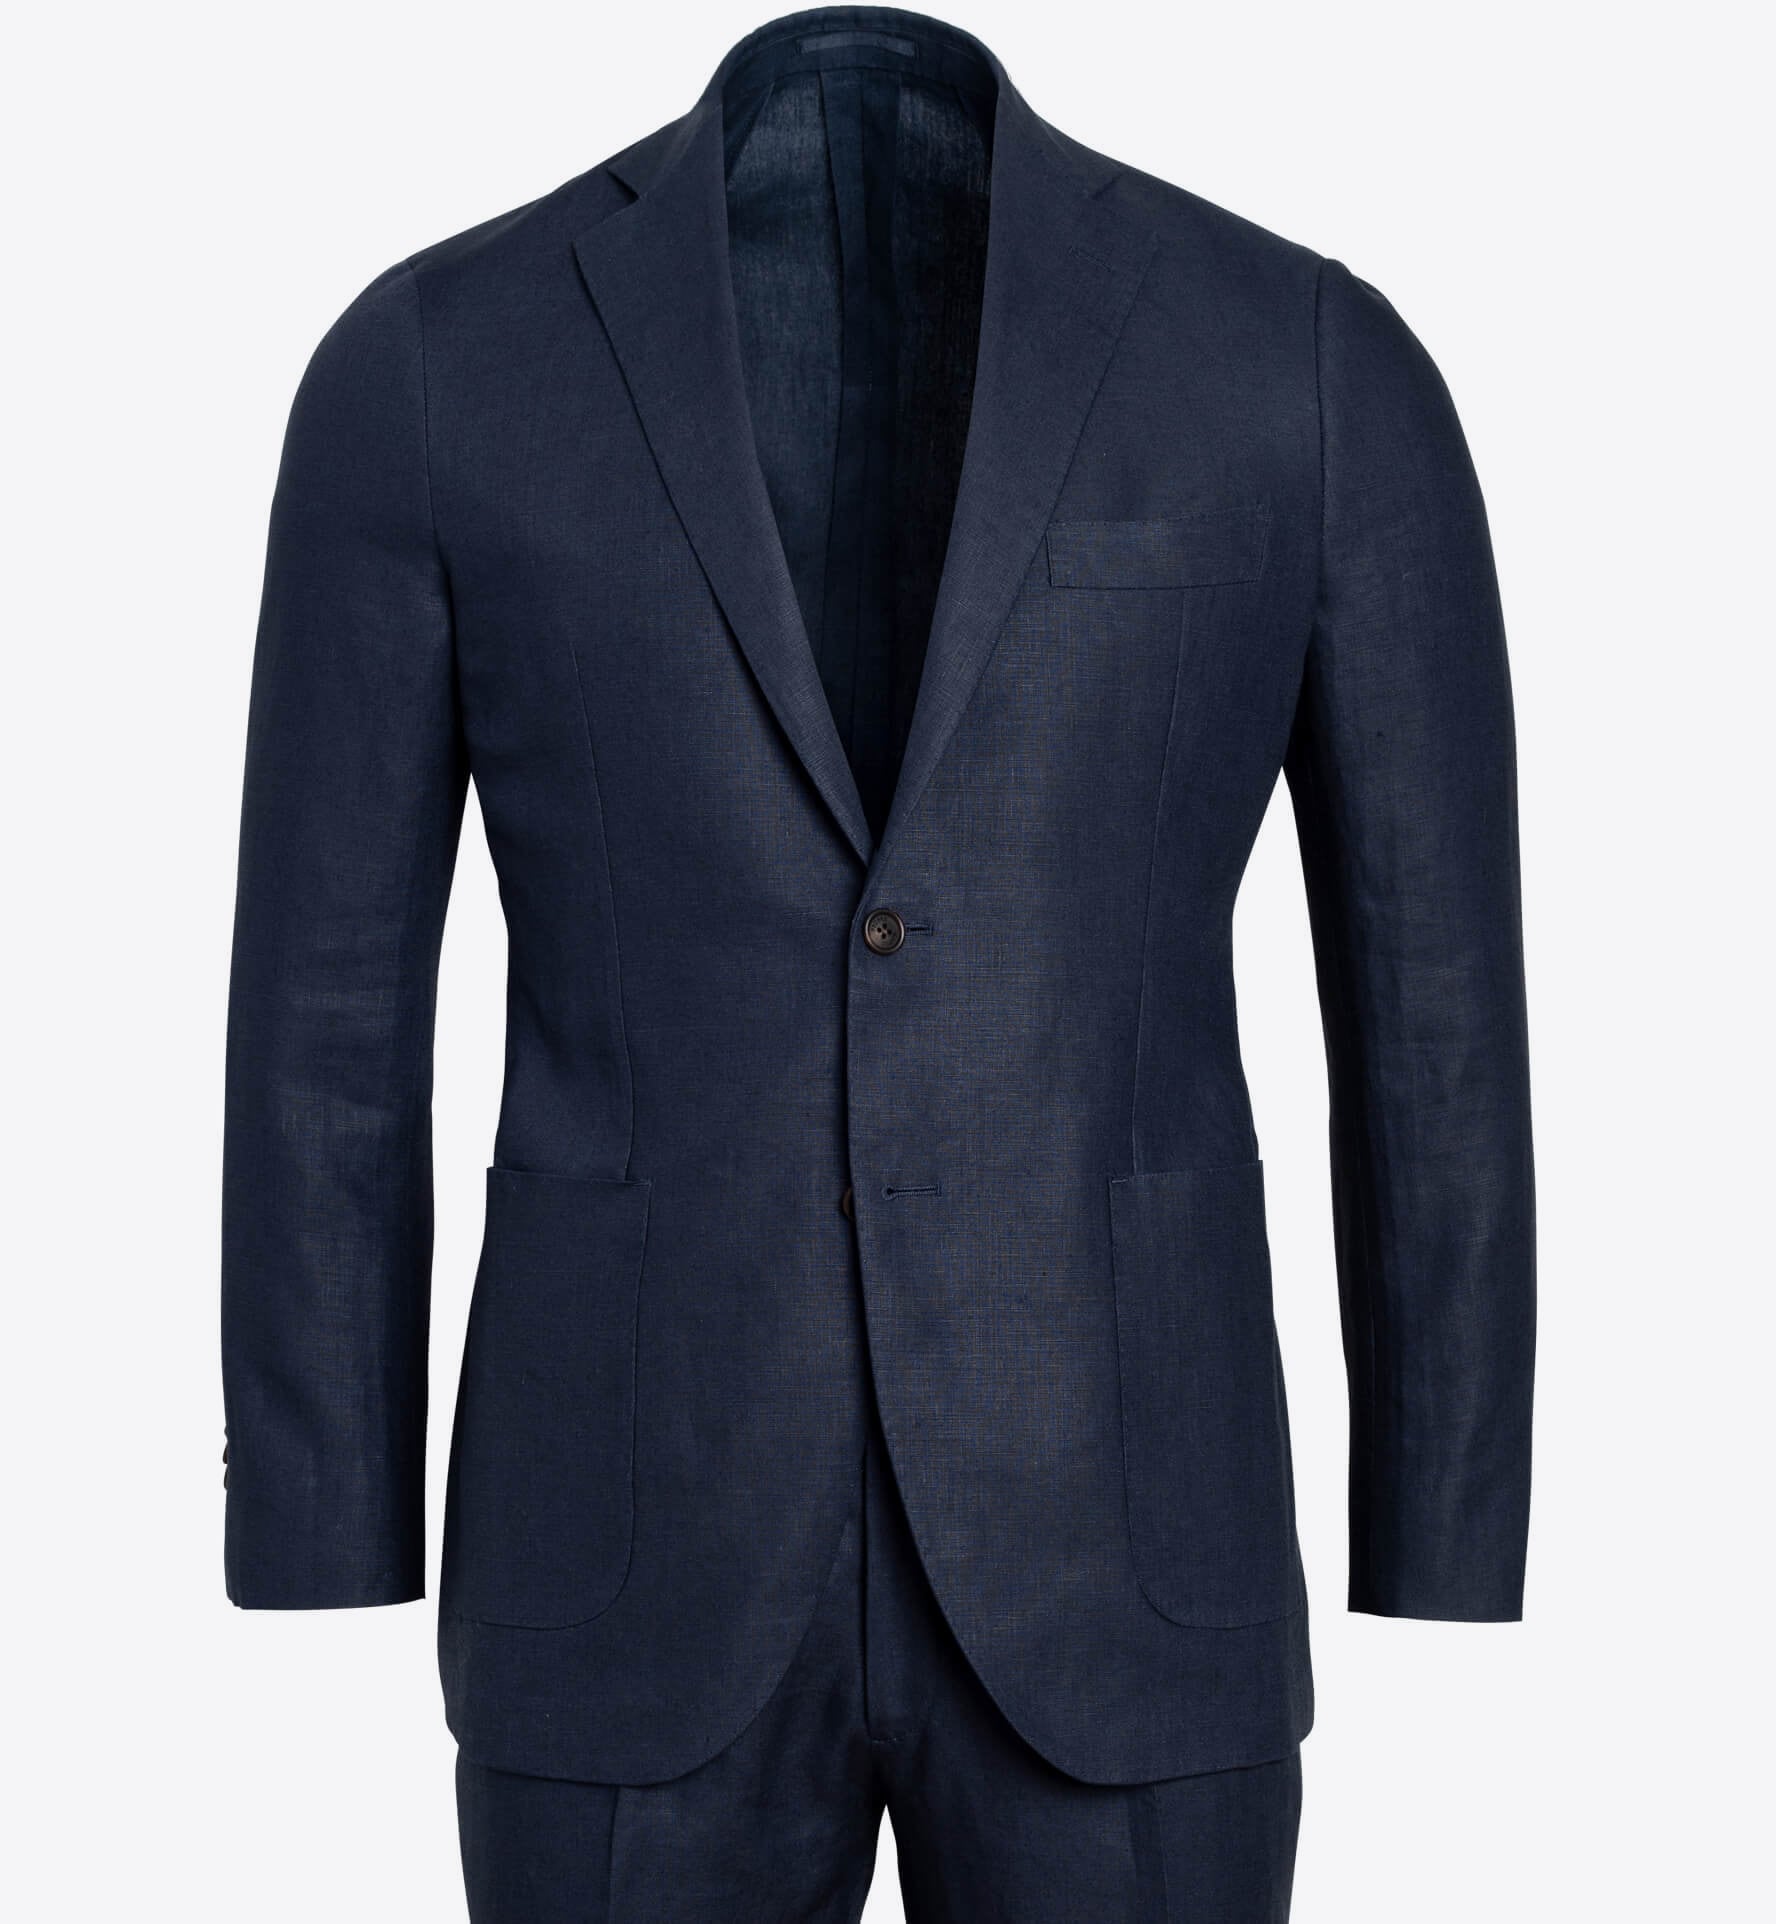 Bedford Navy Irish Linen Suit - Custom Fit Tailored Clothing